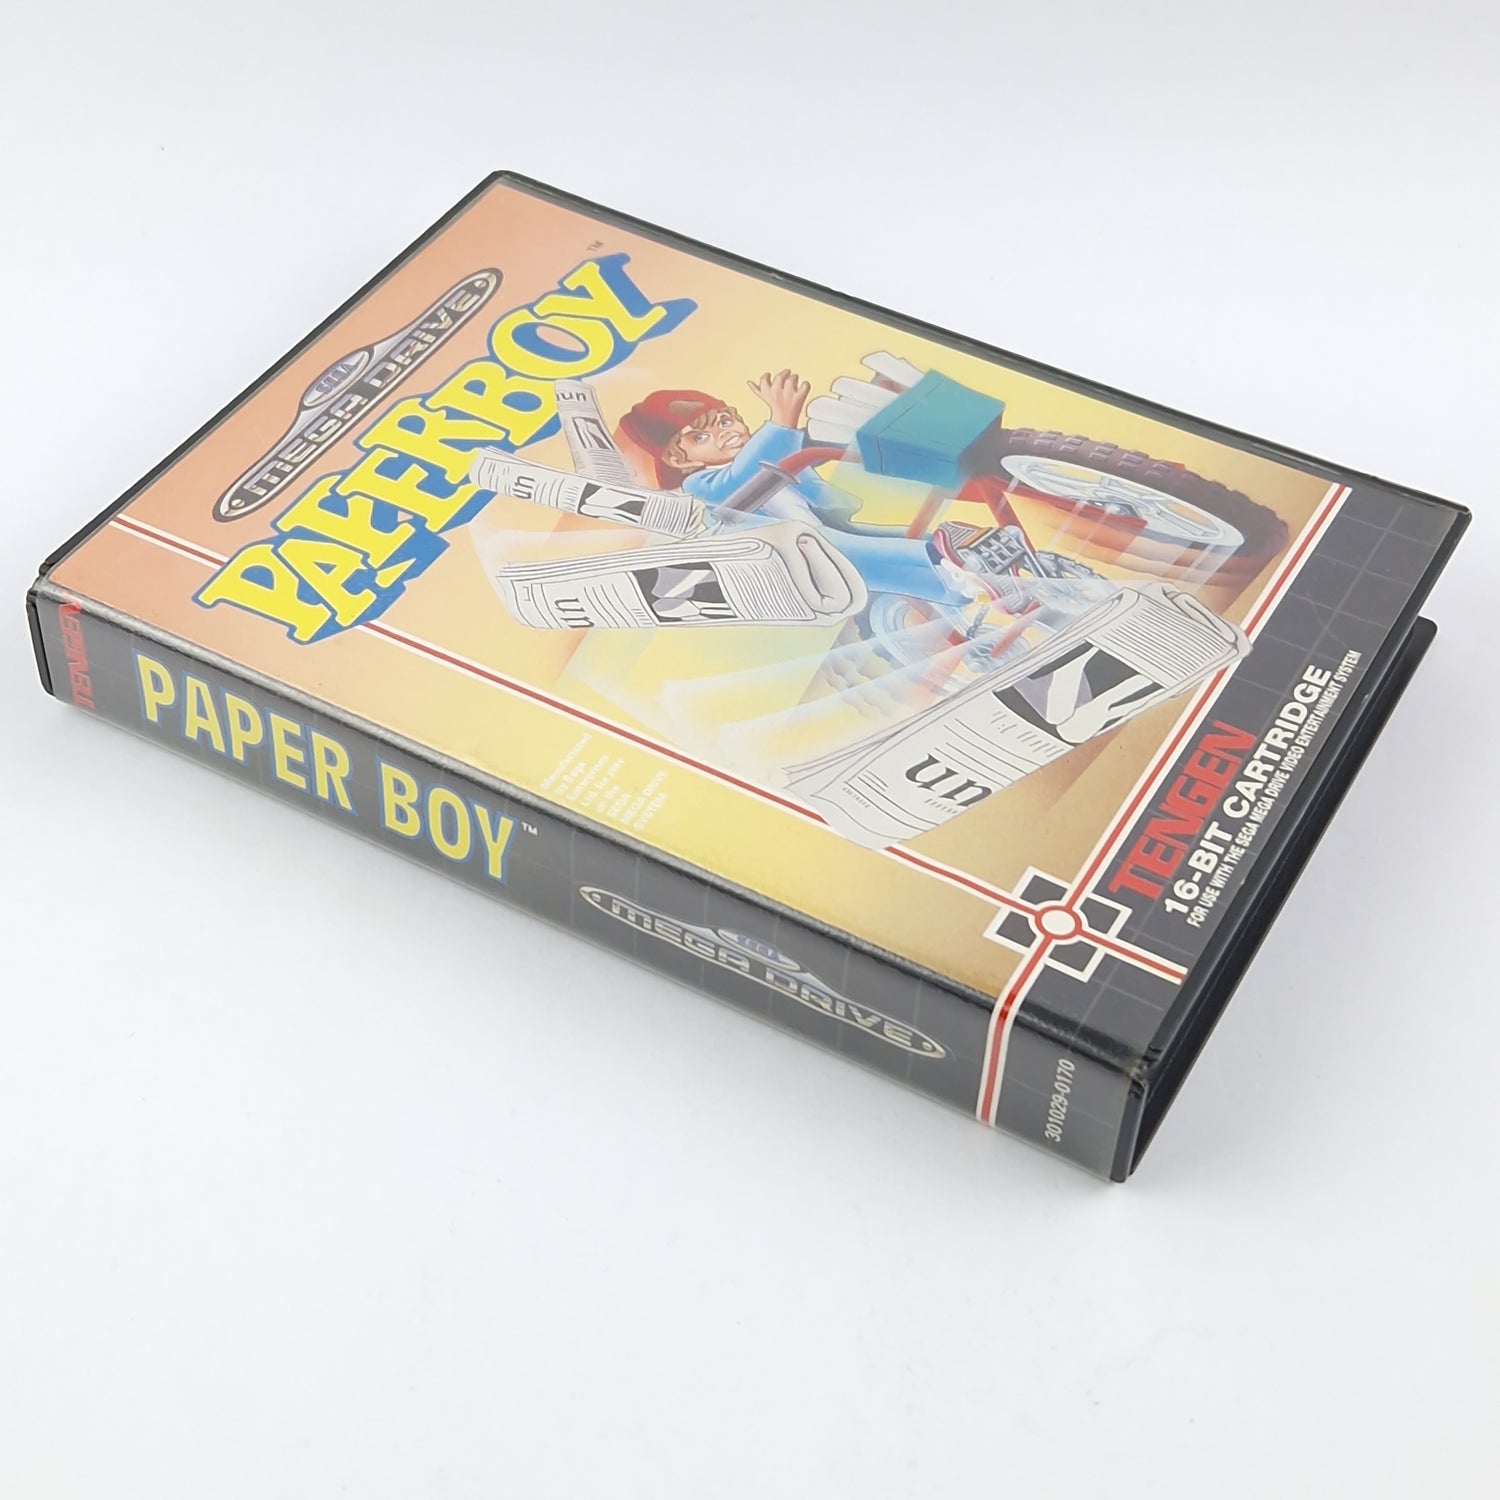 Sega Mega Drive Spiel : Paperboy - Modul Anleitung OVP cib / MD PAL GAME TENGEN